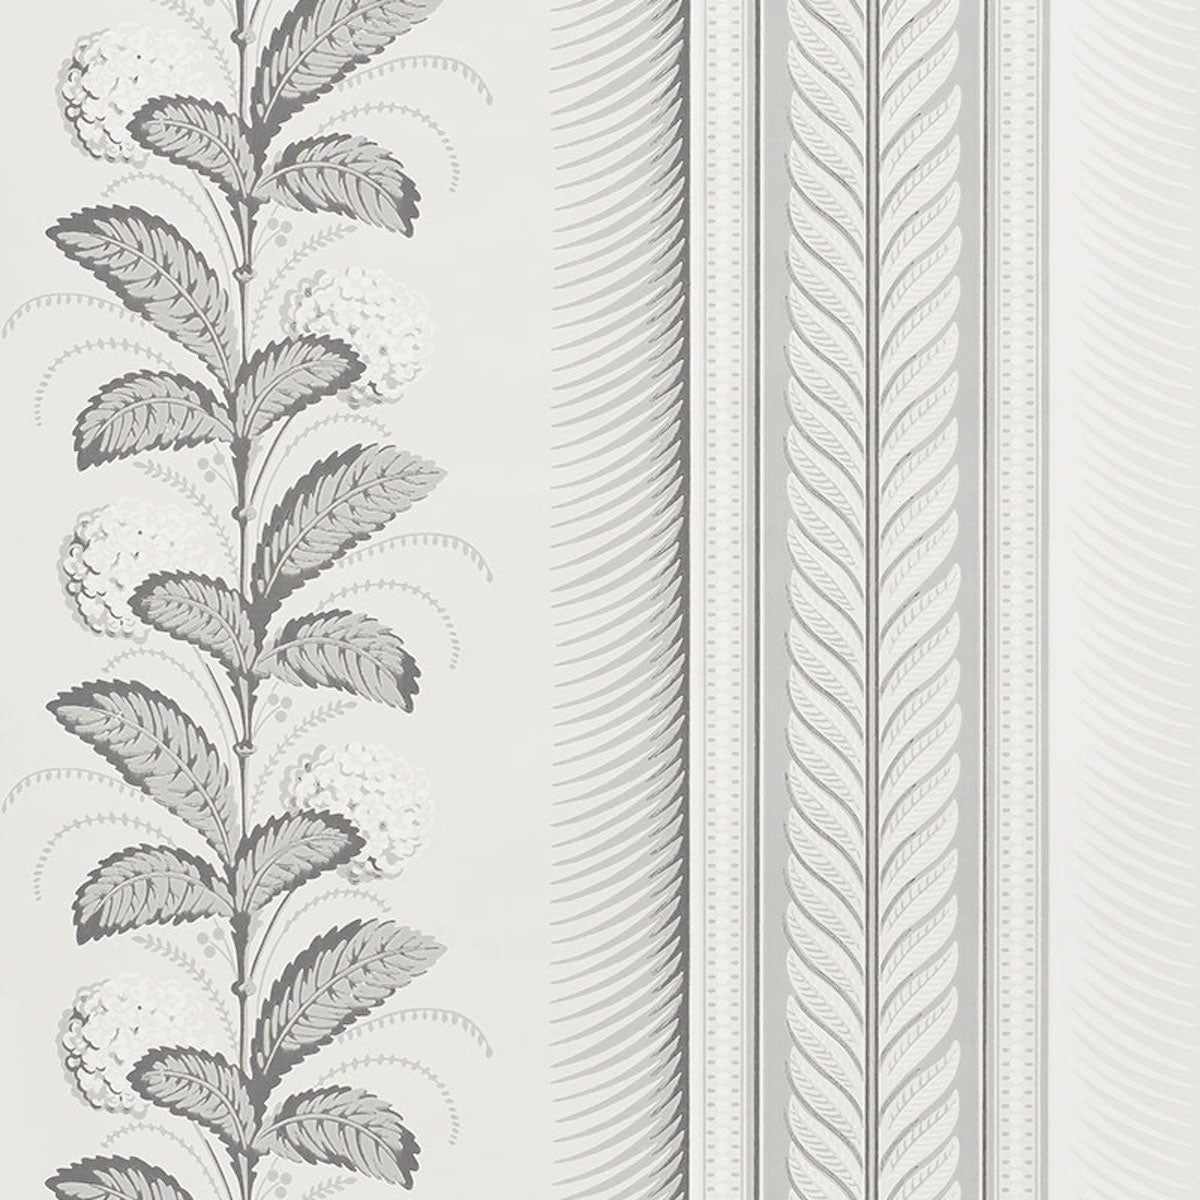 Hydrangea Drape Wallpaper Sample - Grisaille